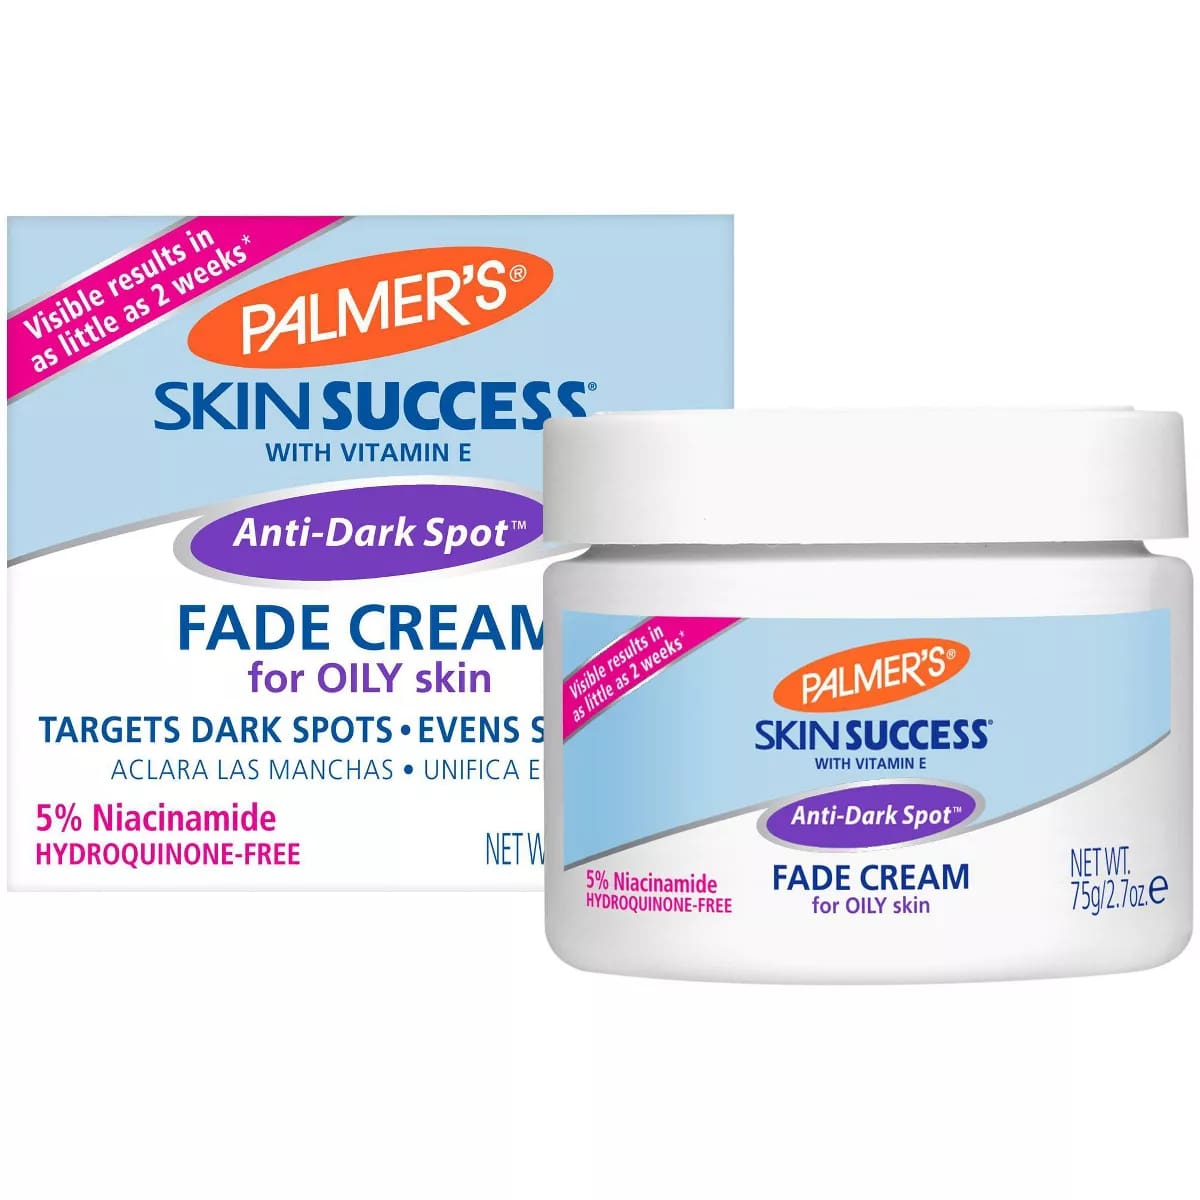 Palmers Skin Success Anti-Dark Spot Fade Cream Face Moisturizer for Oily Skin